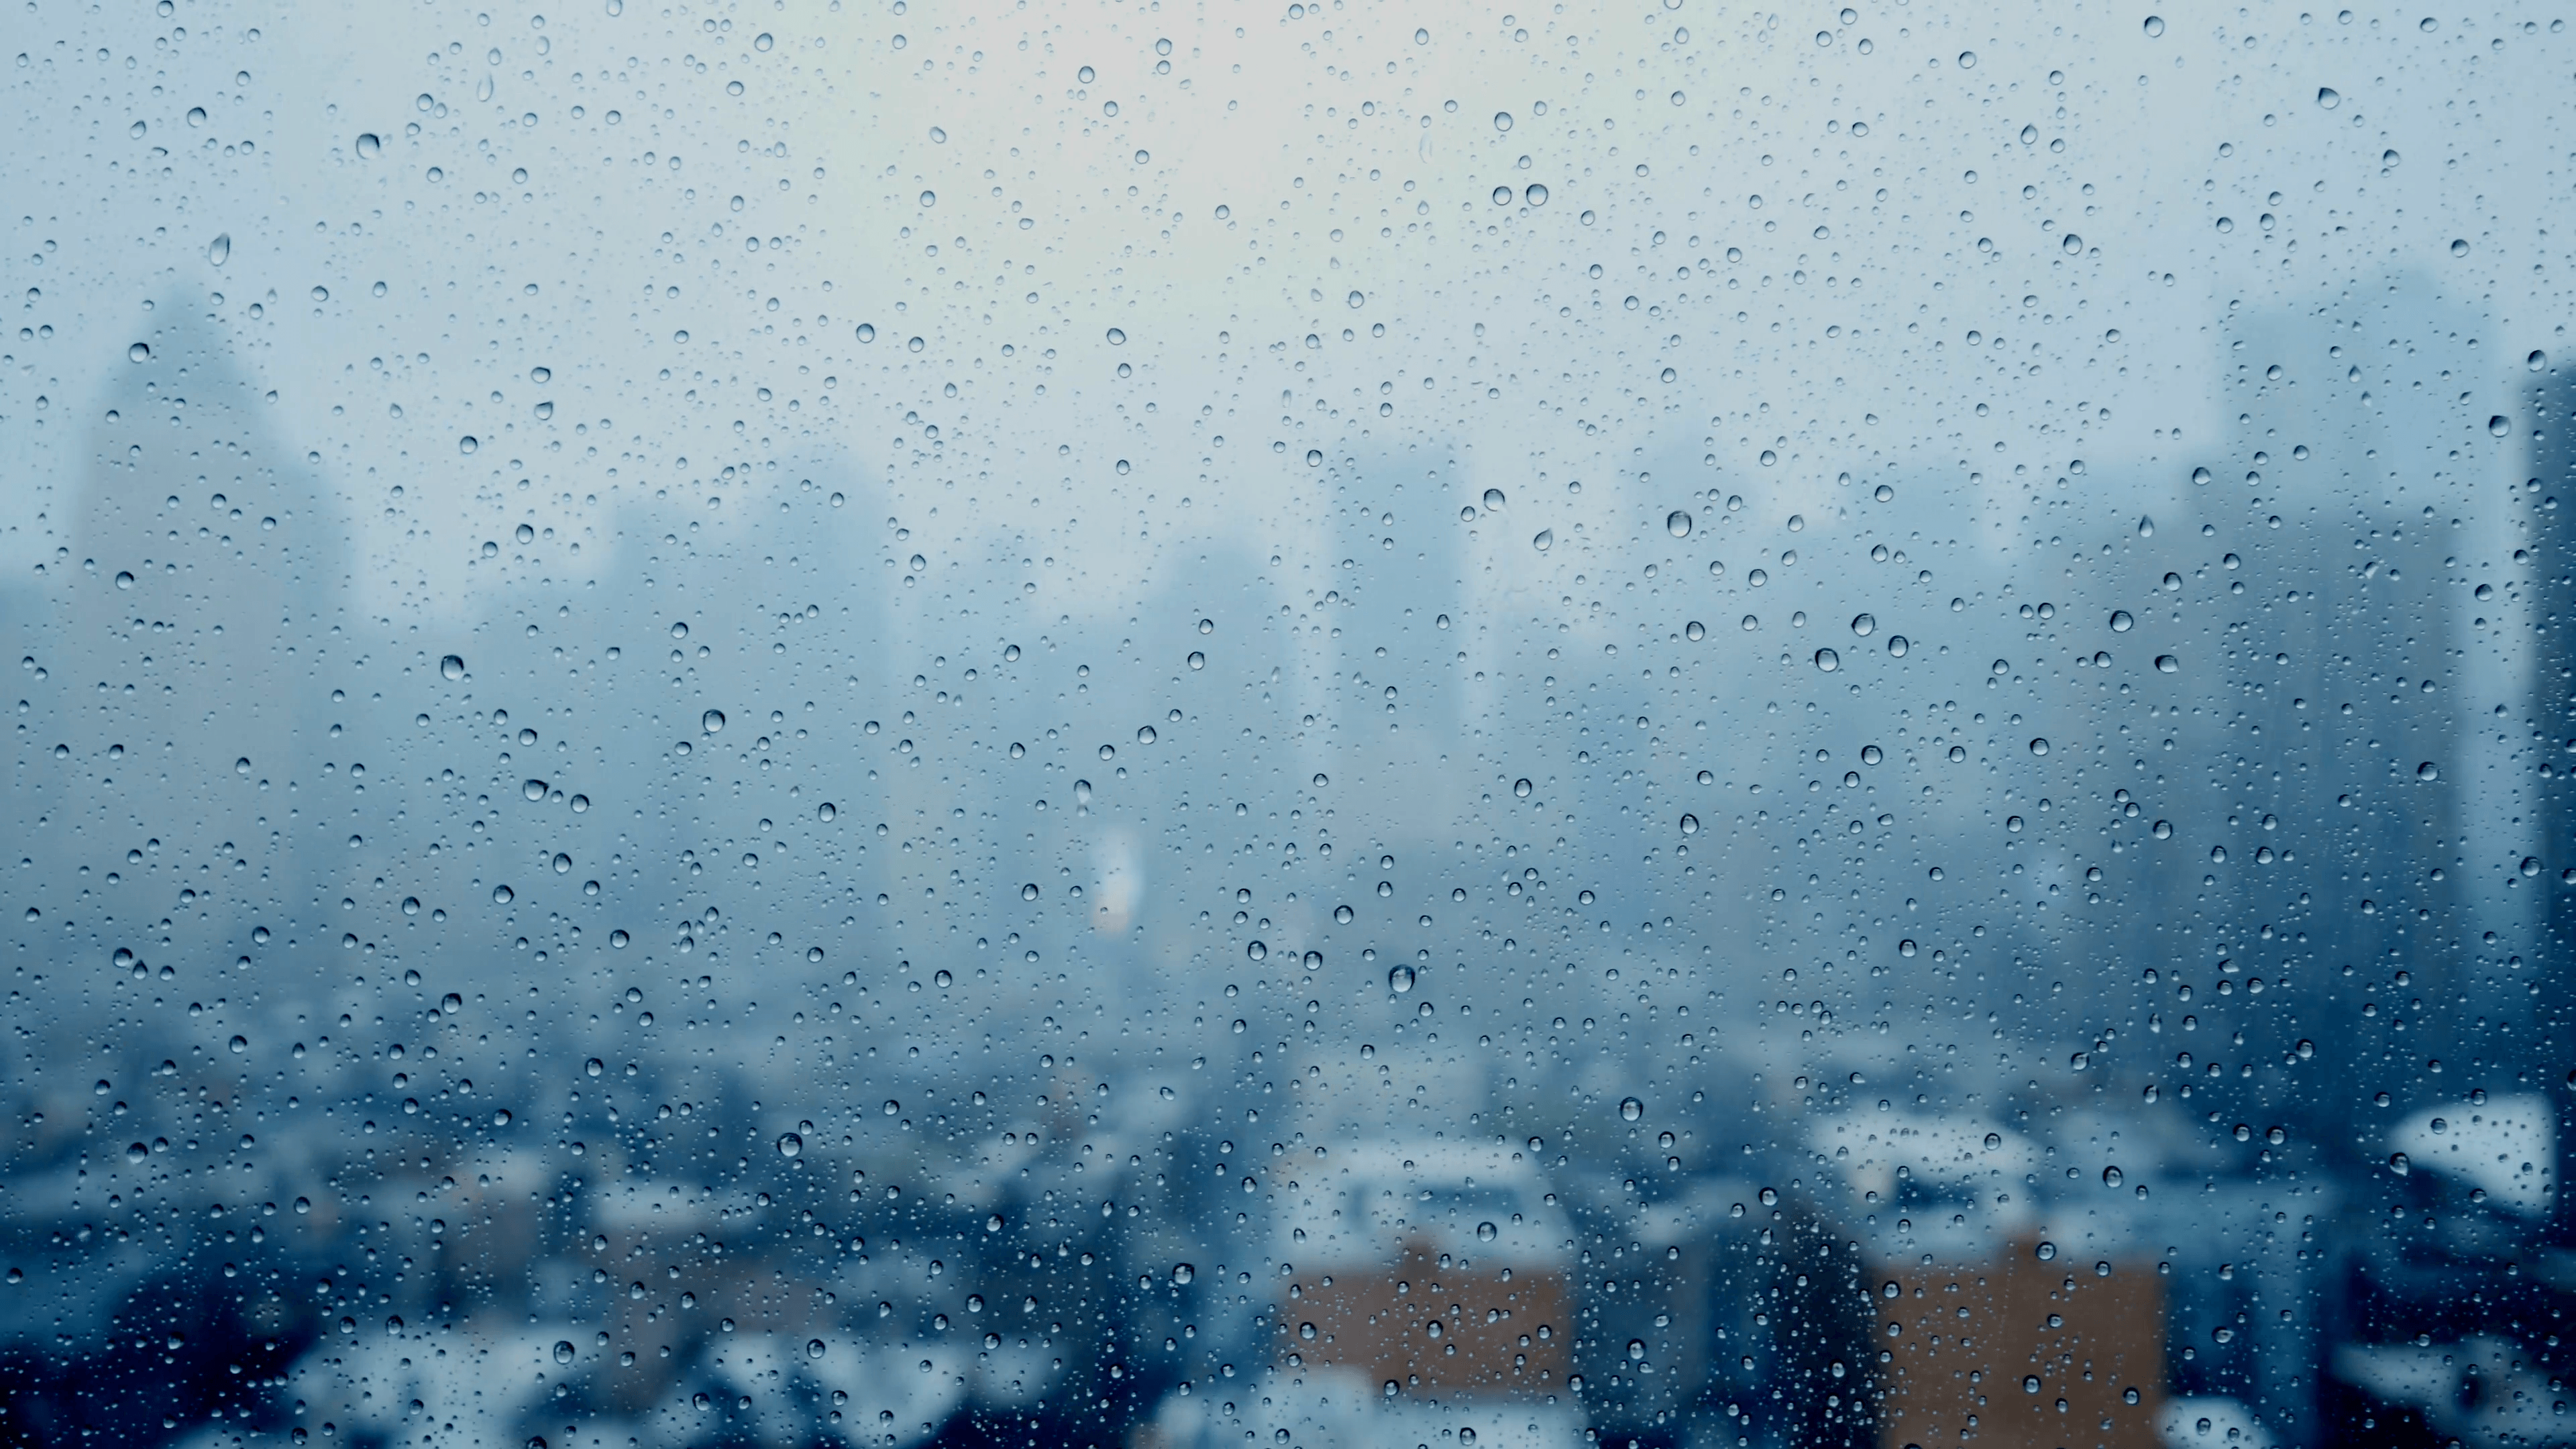 rainy day in the city. rain drops on window glass. depressive mood